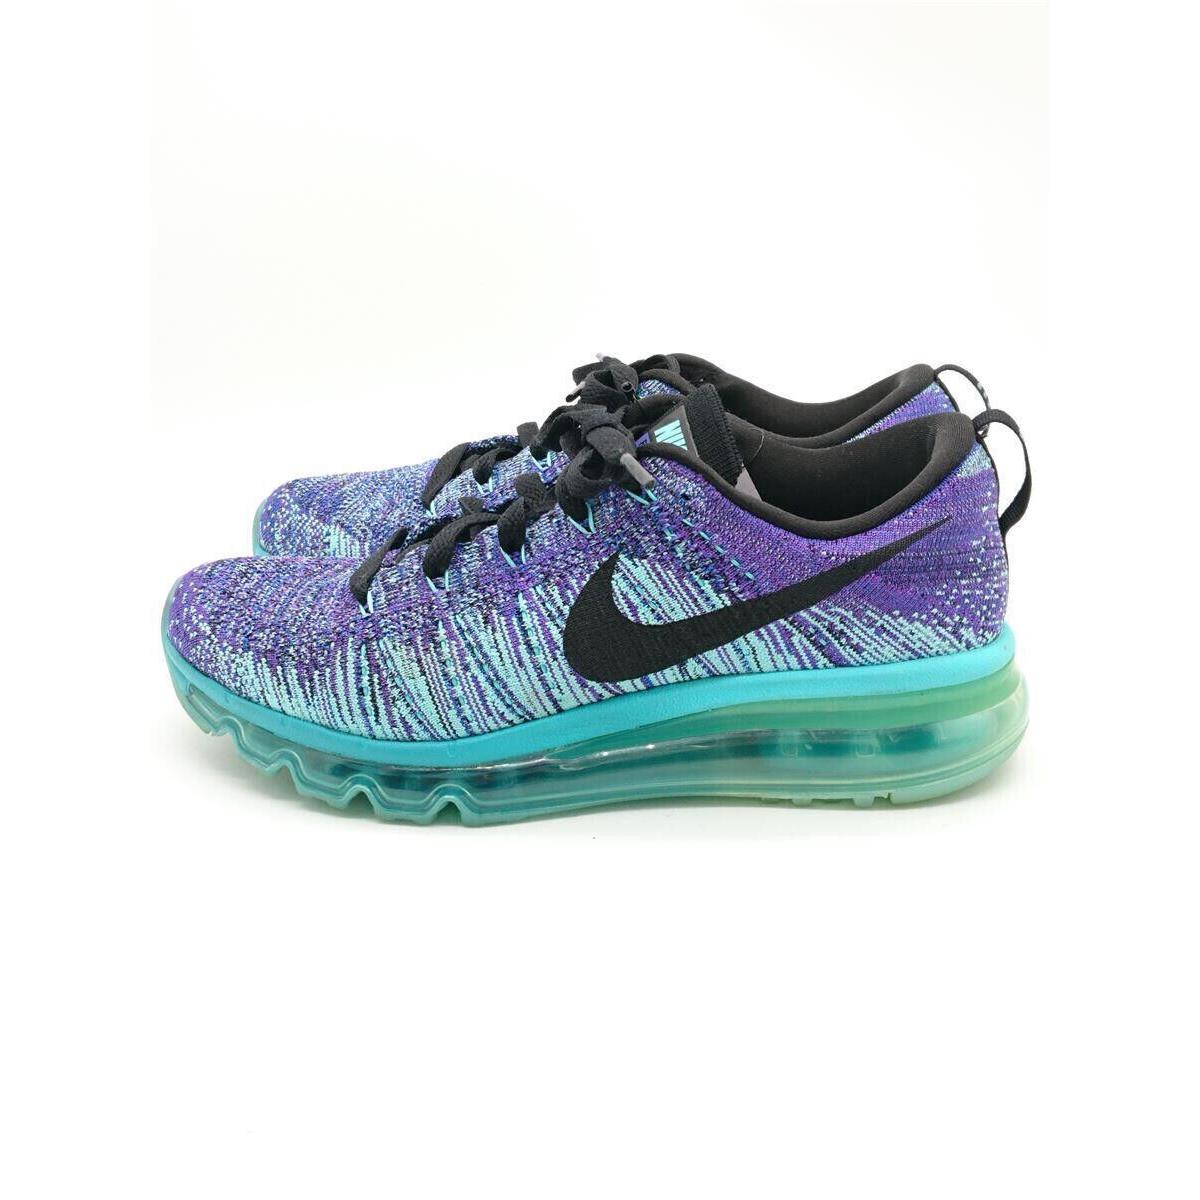 Nike Flyknit Max Royal Teal Hyper Grape Size 9 Womens Gym Shoes 620659 501